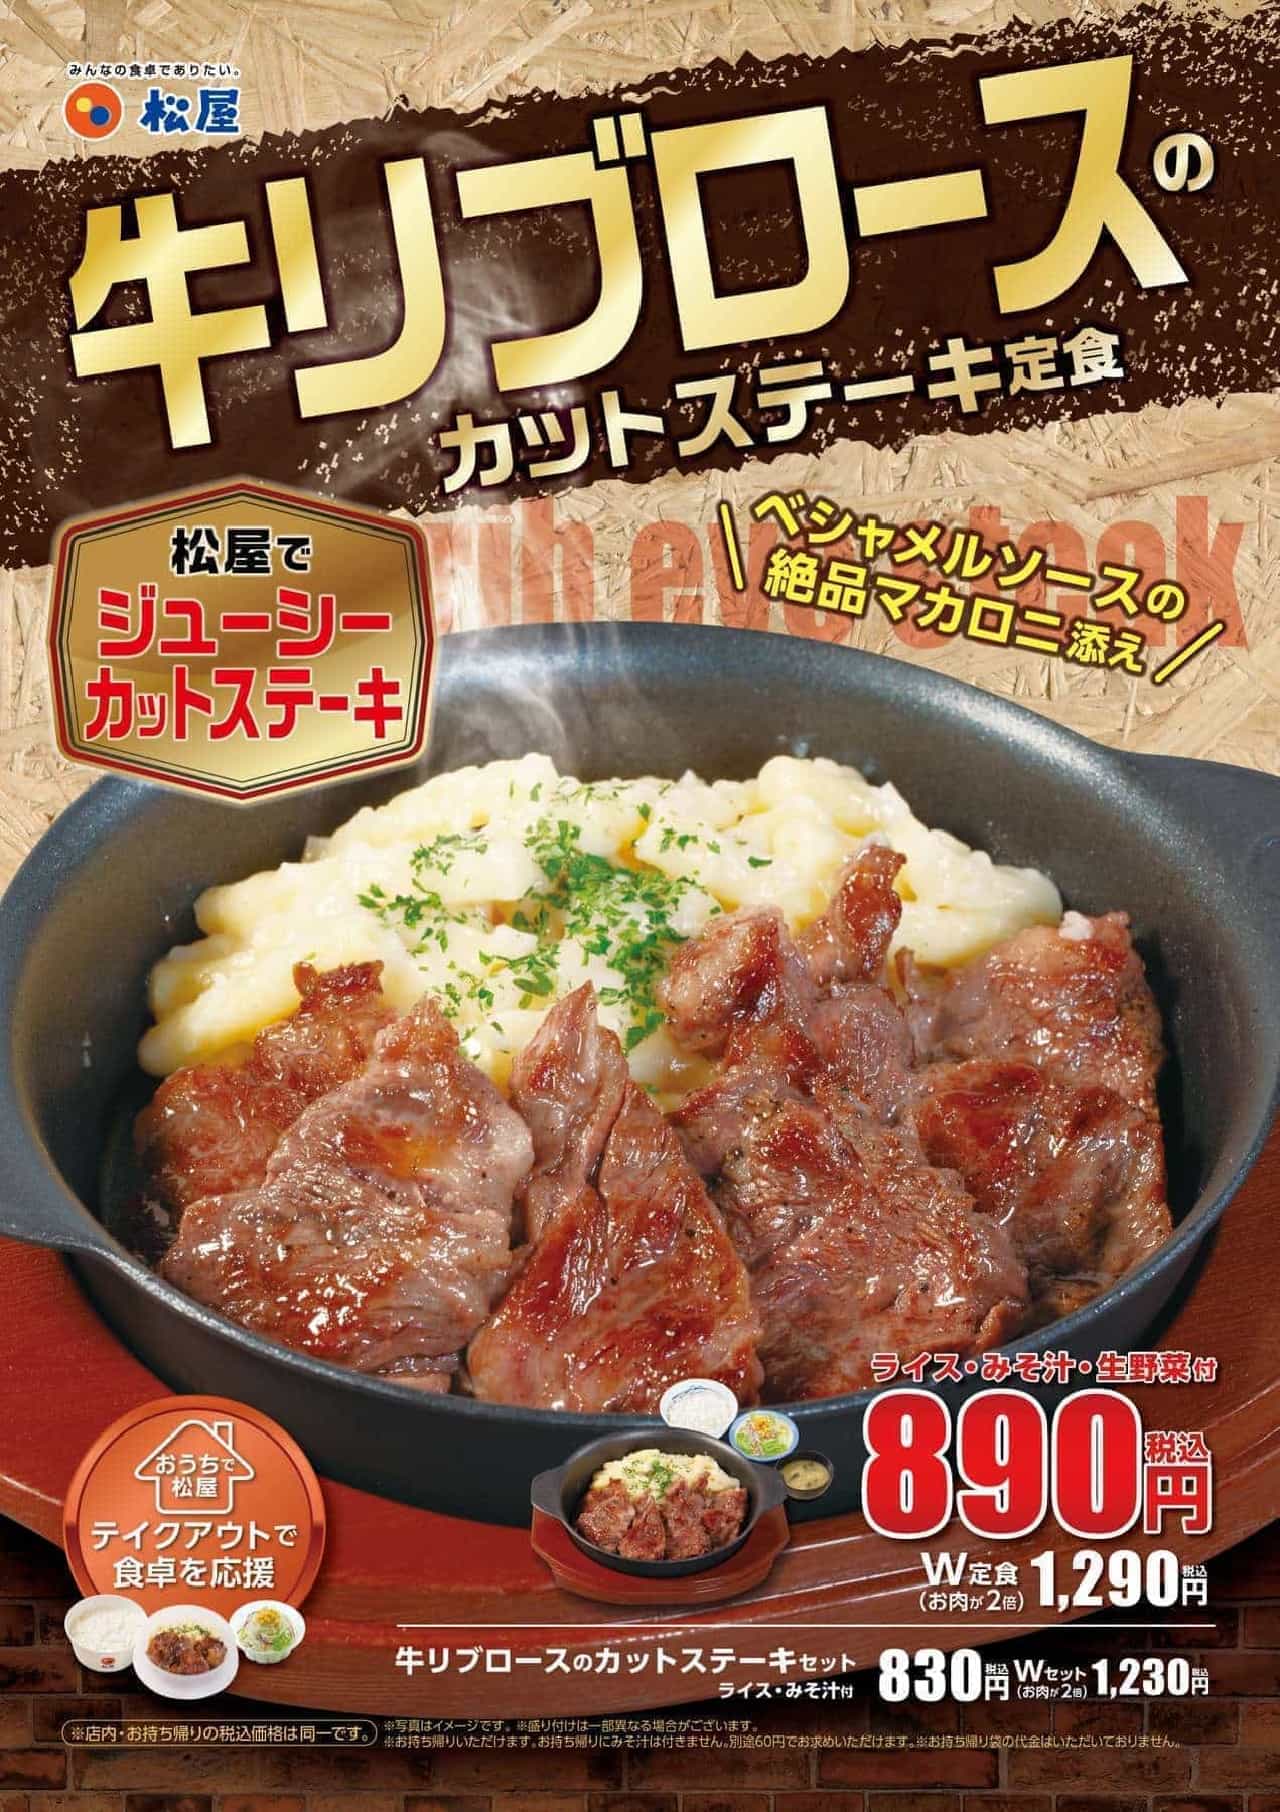 "Beef rib roast cut steak set meal" at Matsuya